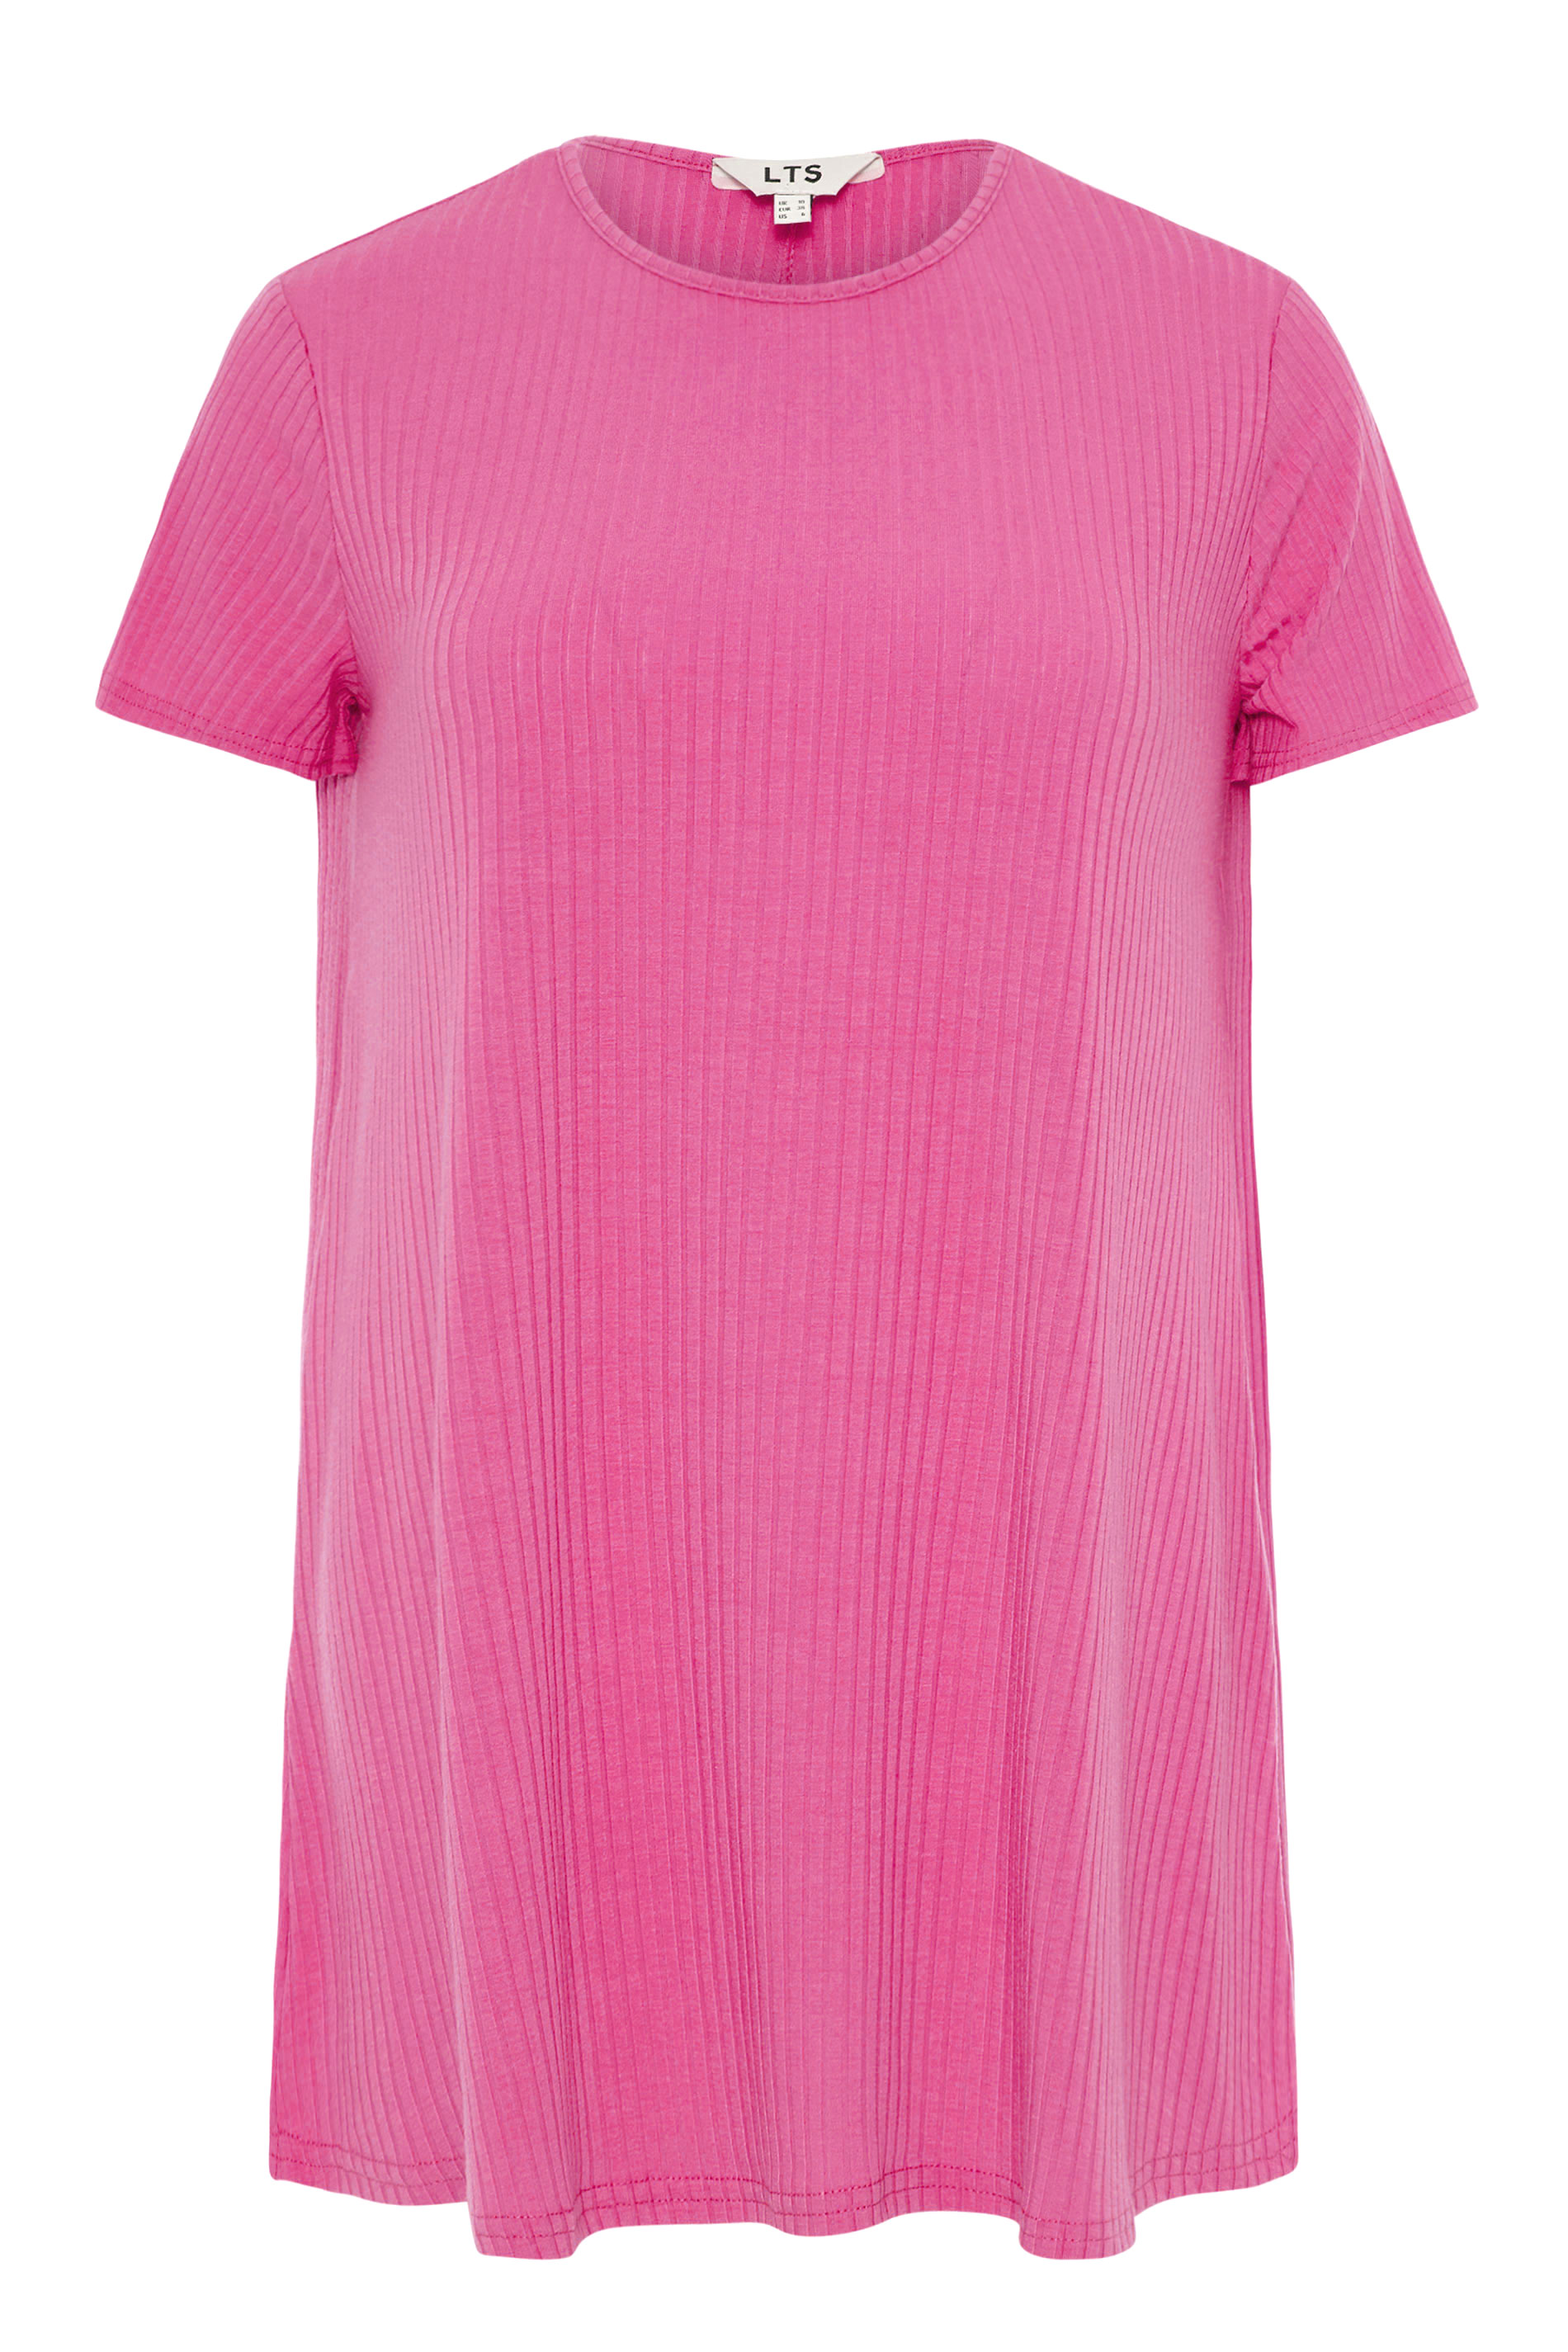 LTS Hot Pink Swing T-Shirt | Long Tall Sally